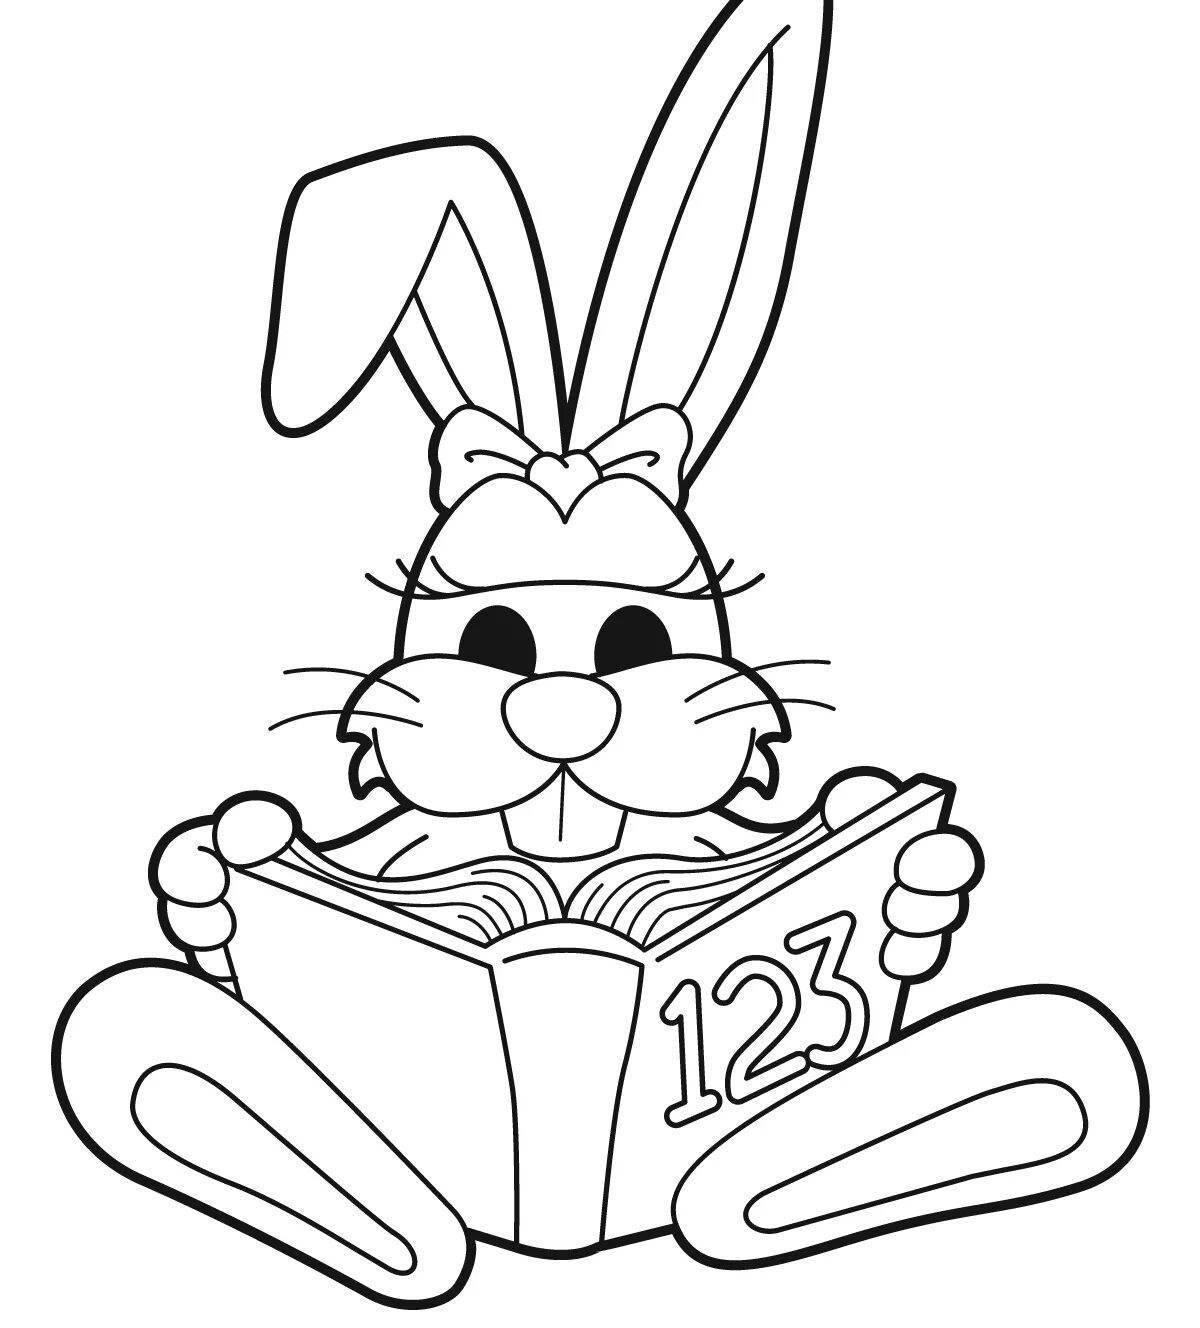 Delightful coloring book rabbit man